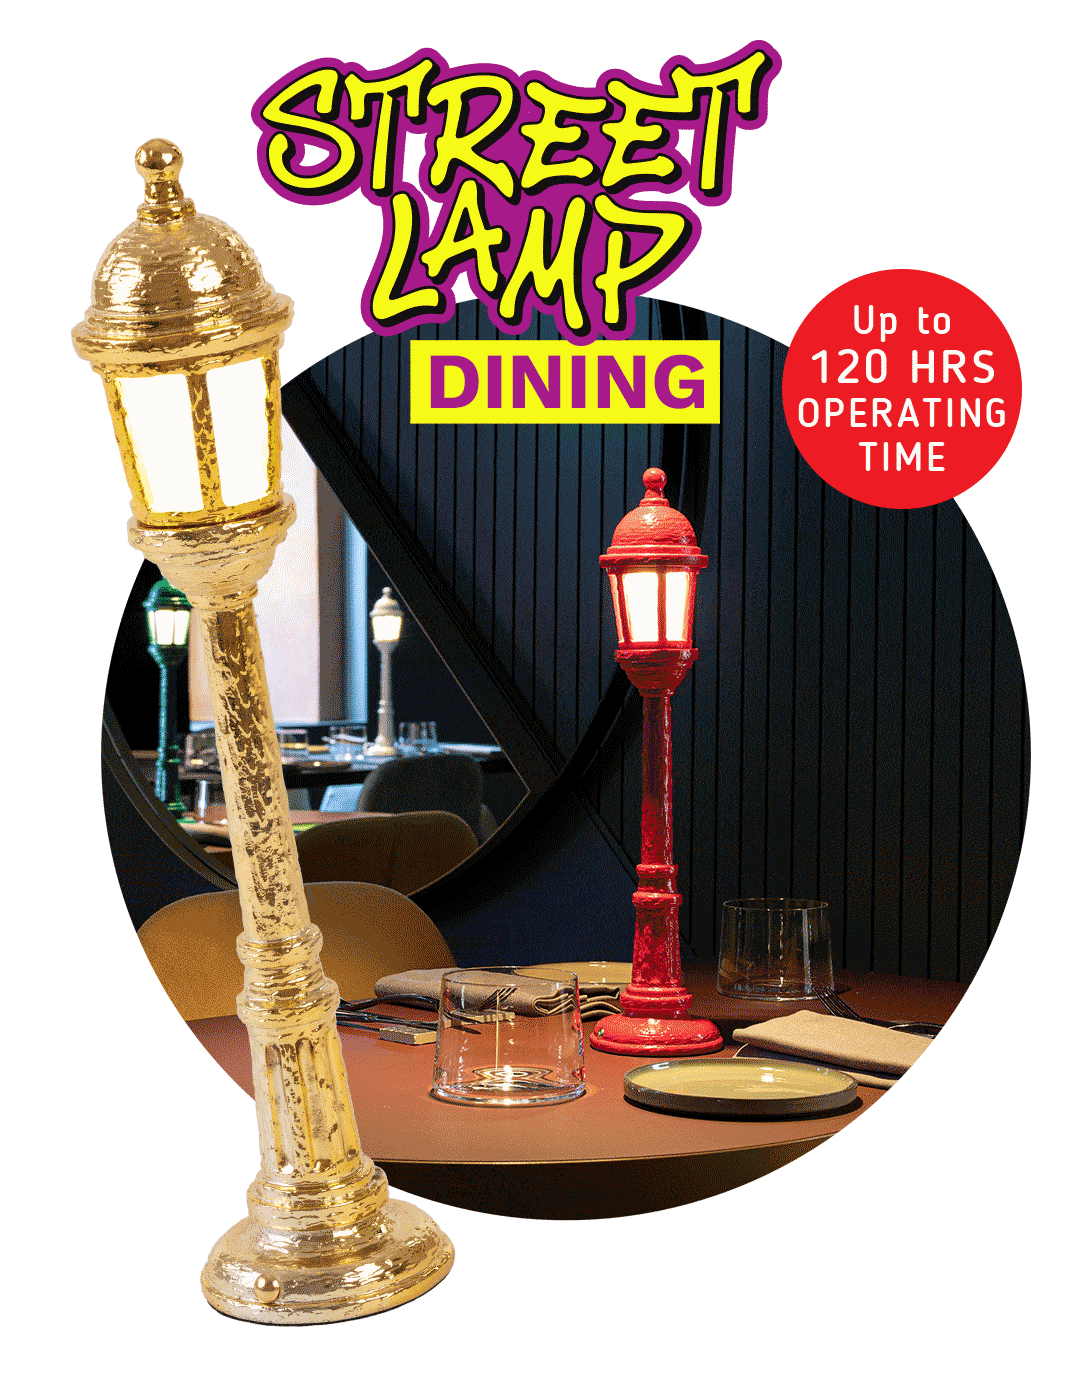 streetlamp_dining_2